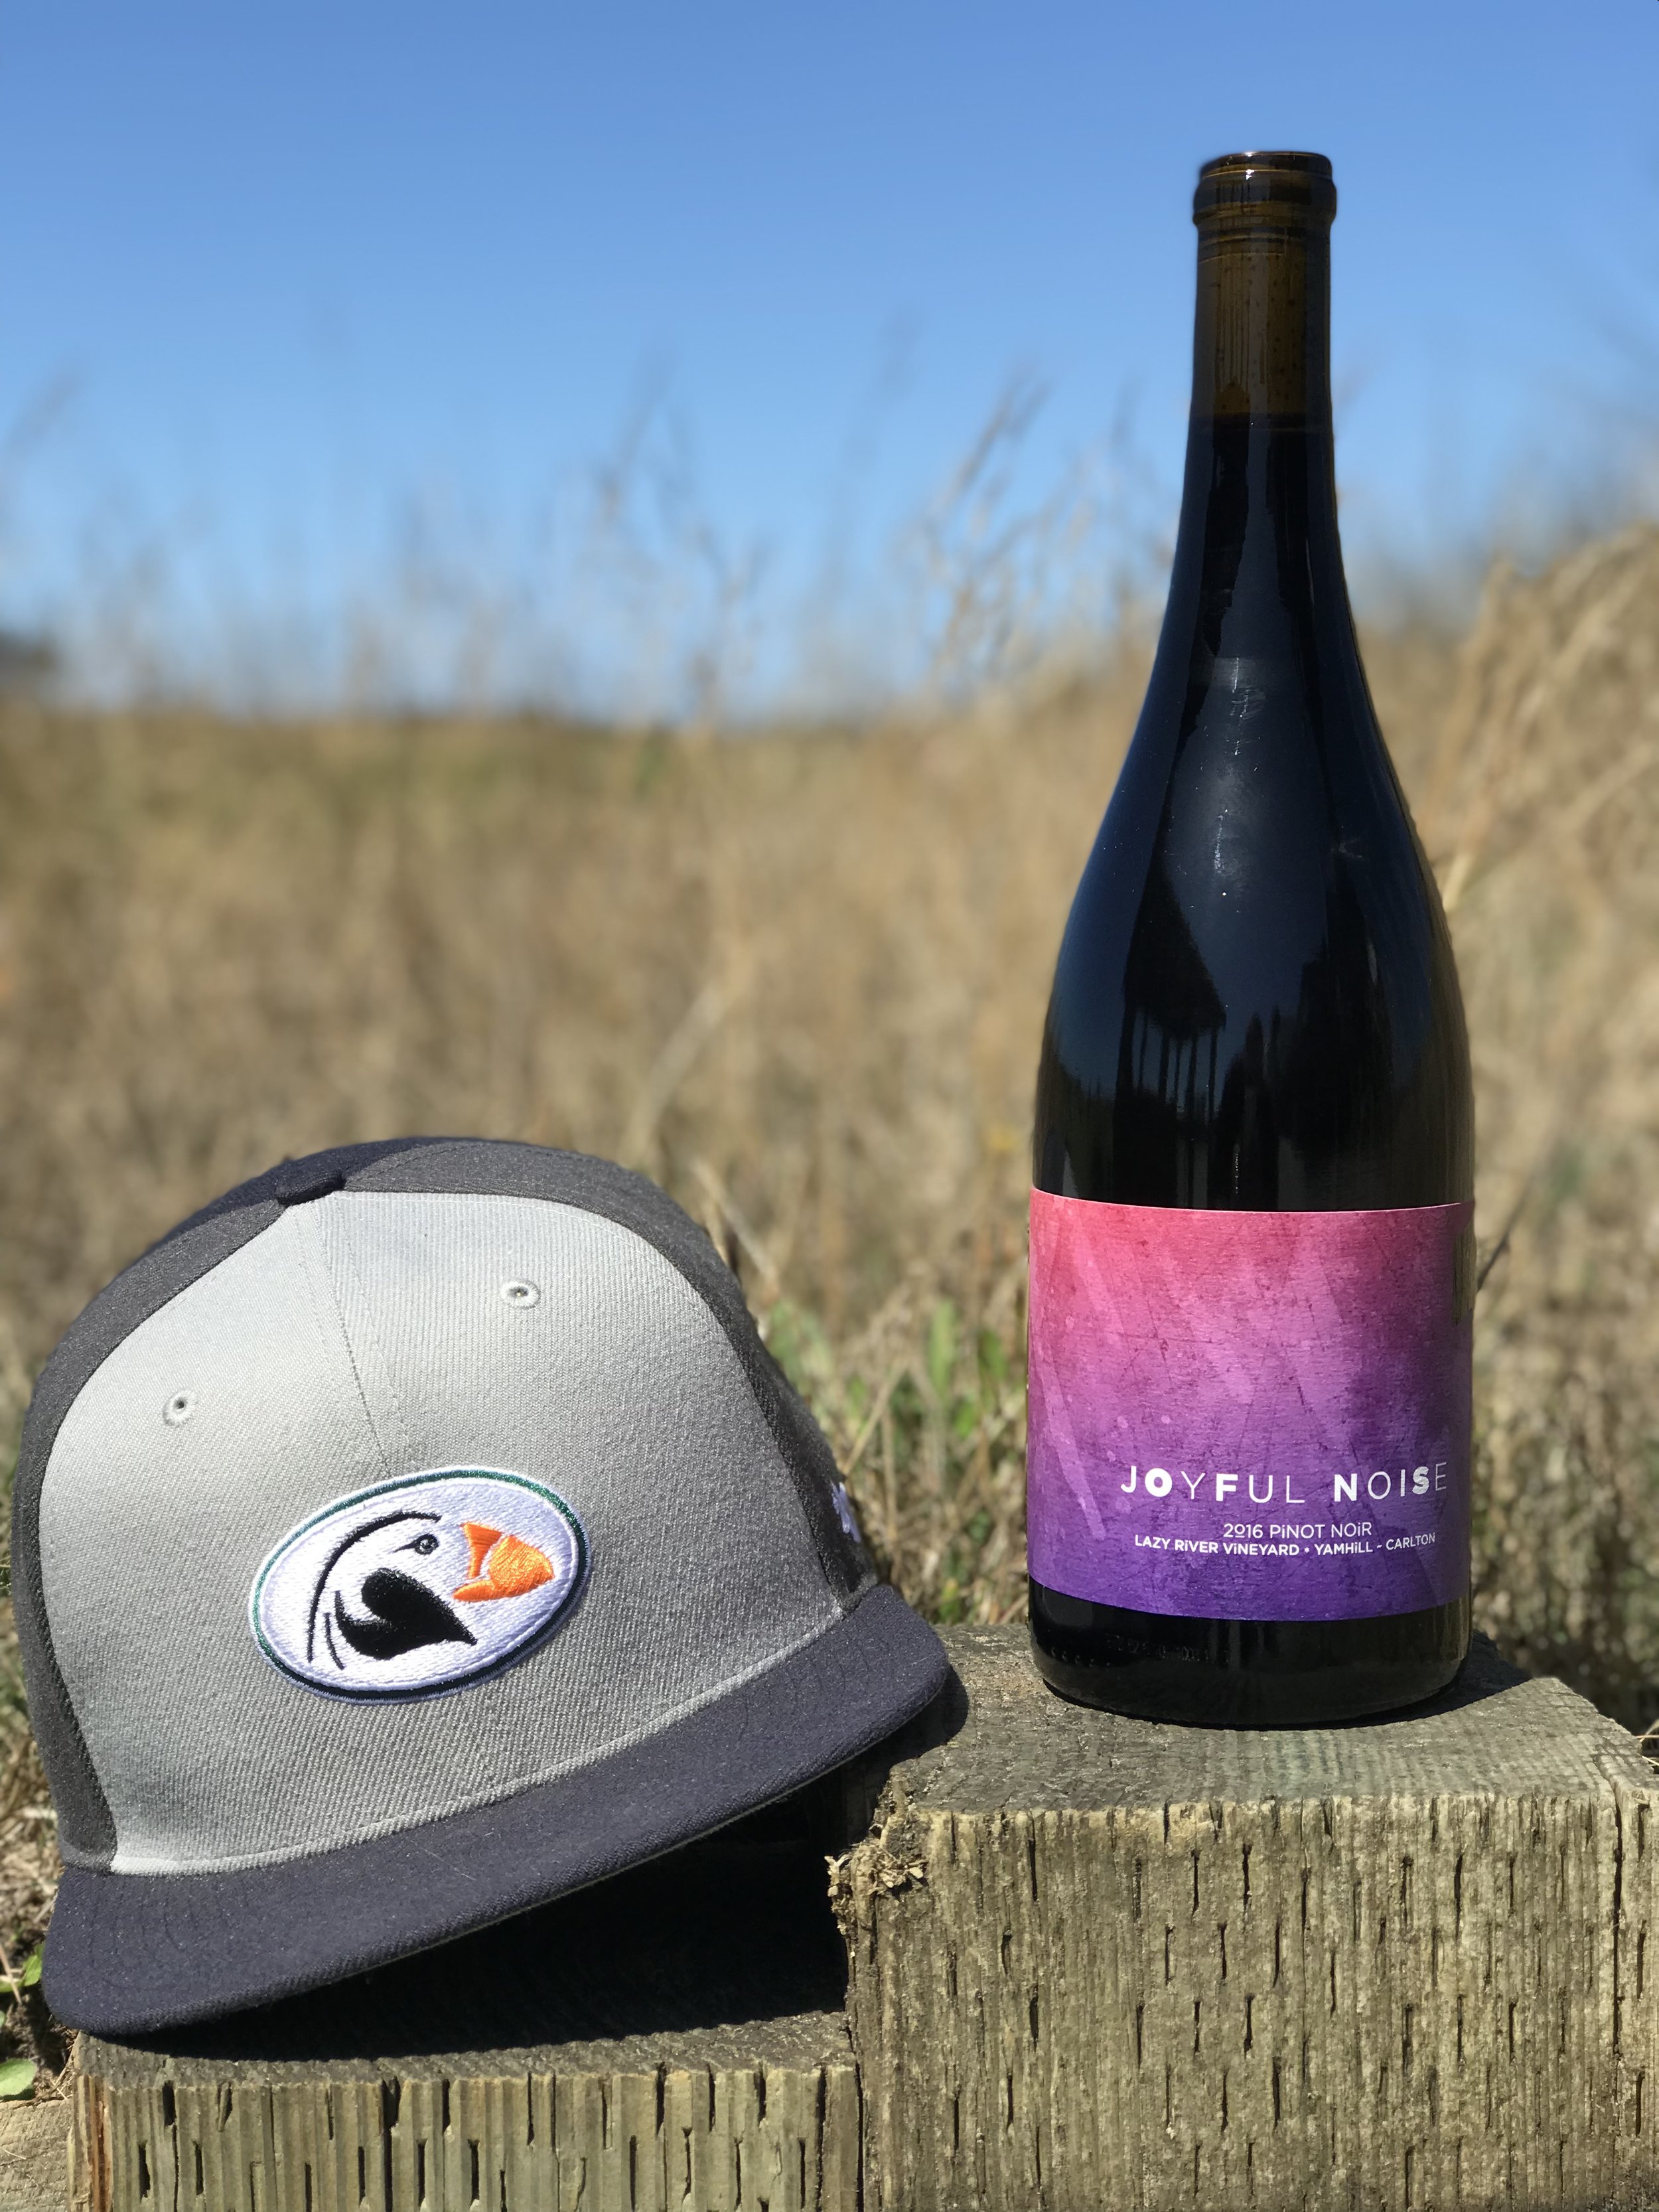 Bottle of Joyful Noise wine and a baseball cap